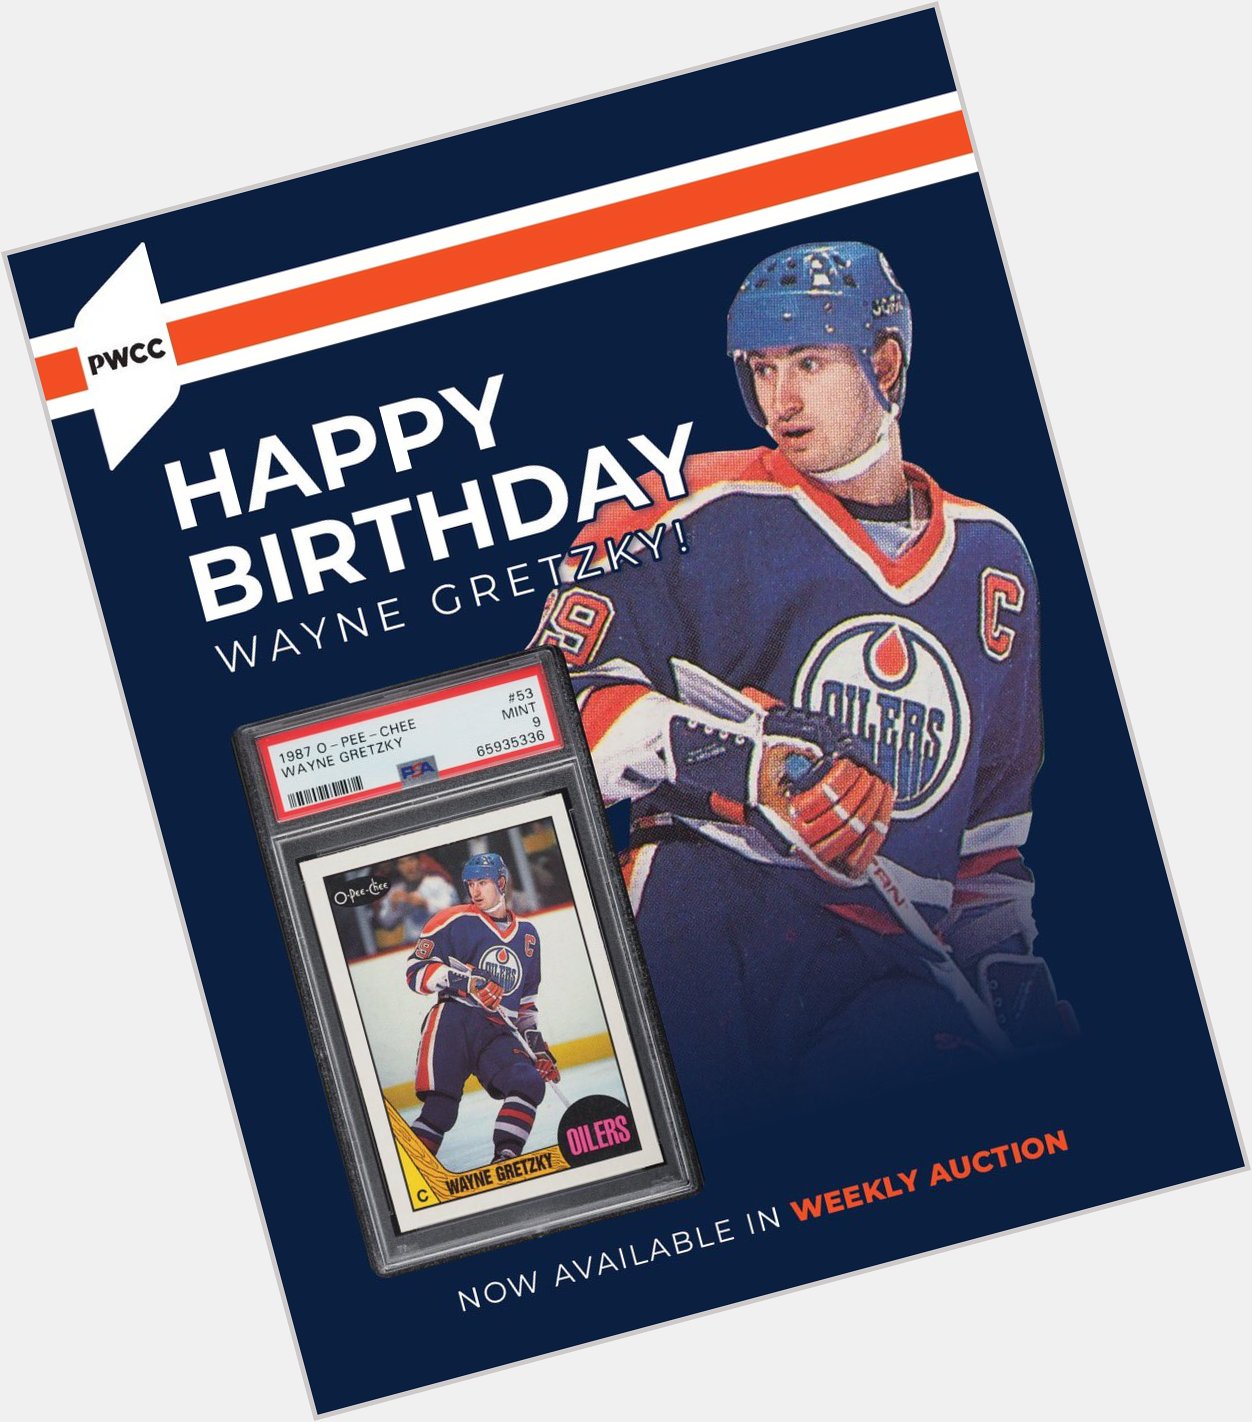 A big happy birthday shoutout to The Great One, Wayne Gretzky! 